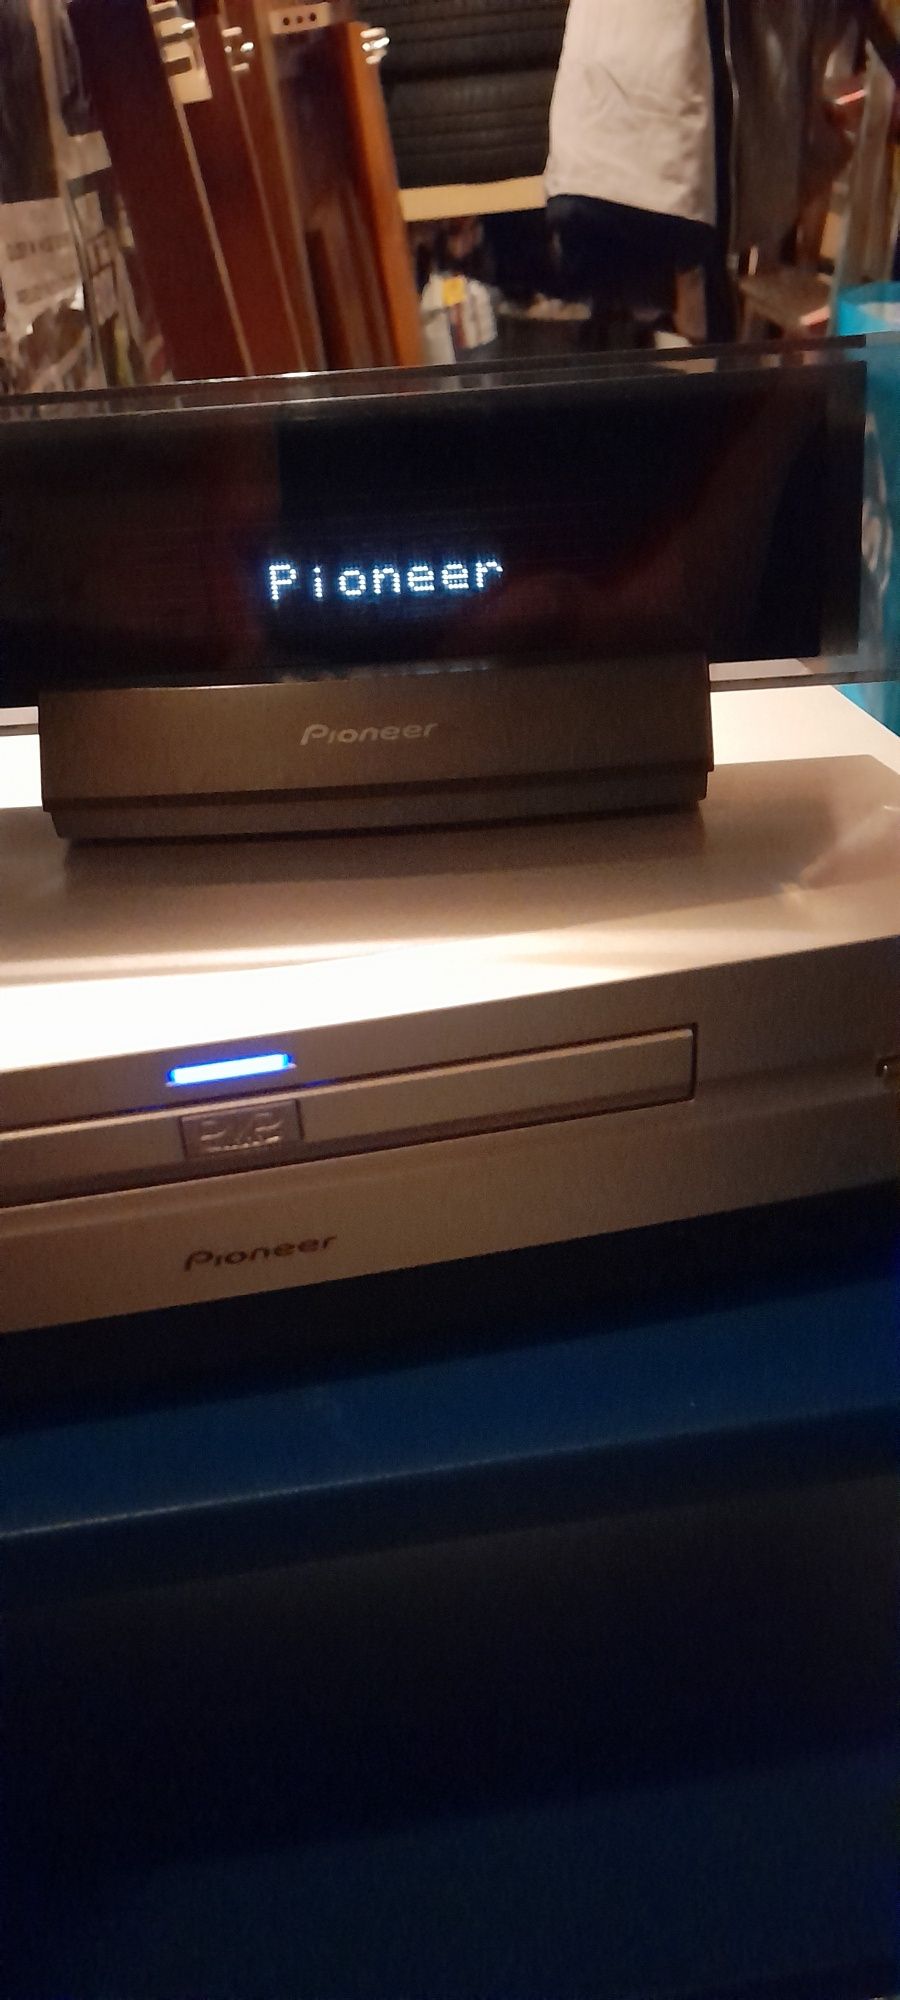 Pioneer ns-dv55 - kino domowe 5.1